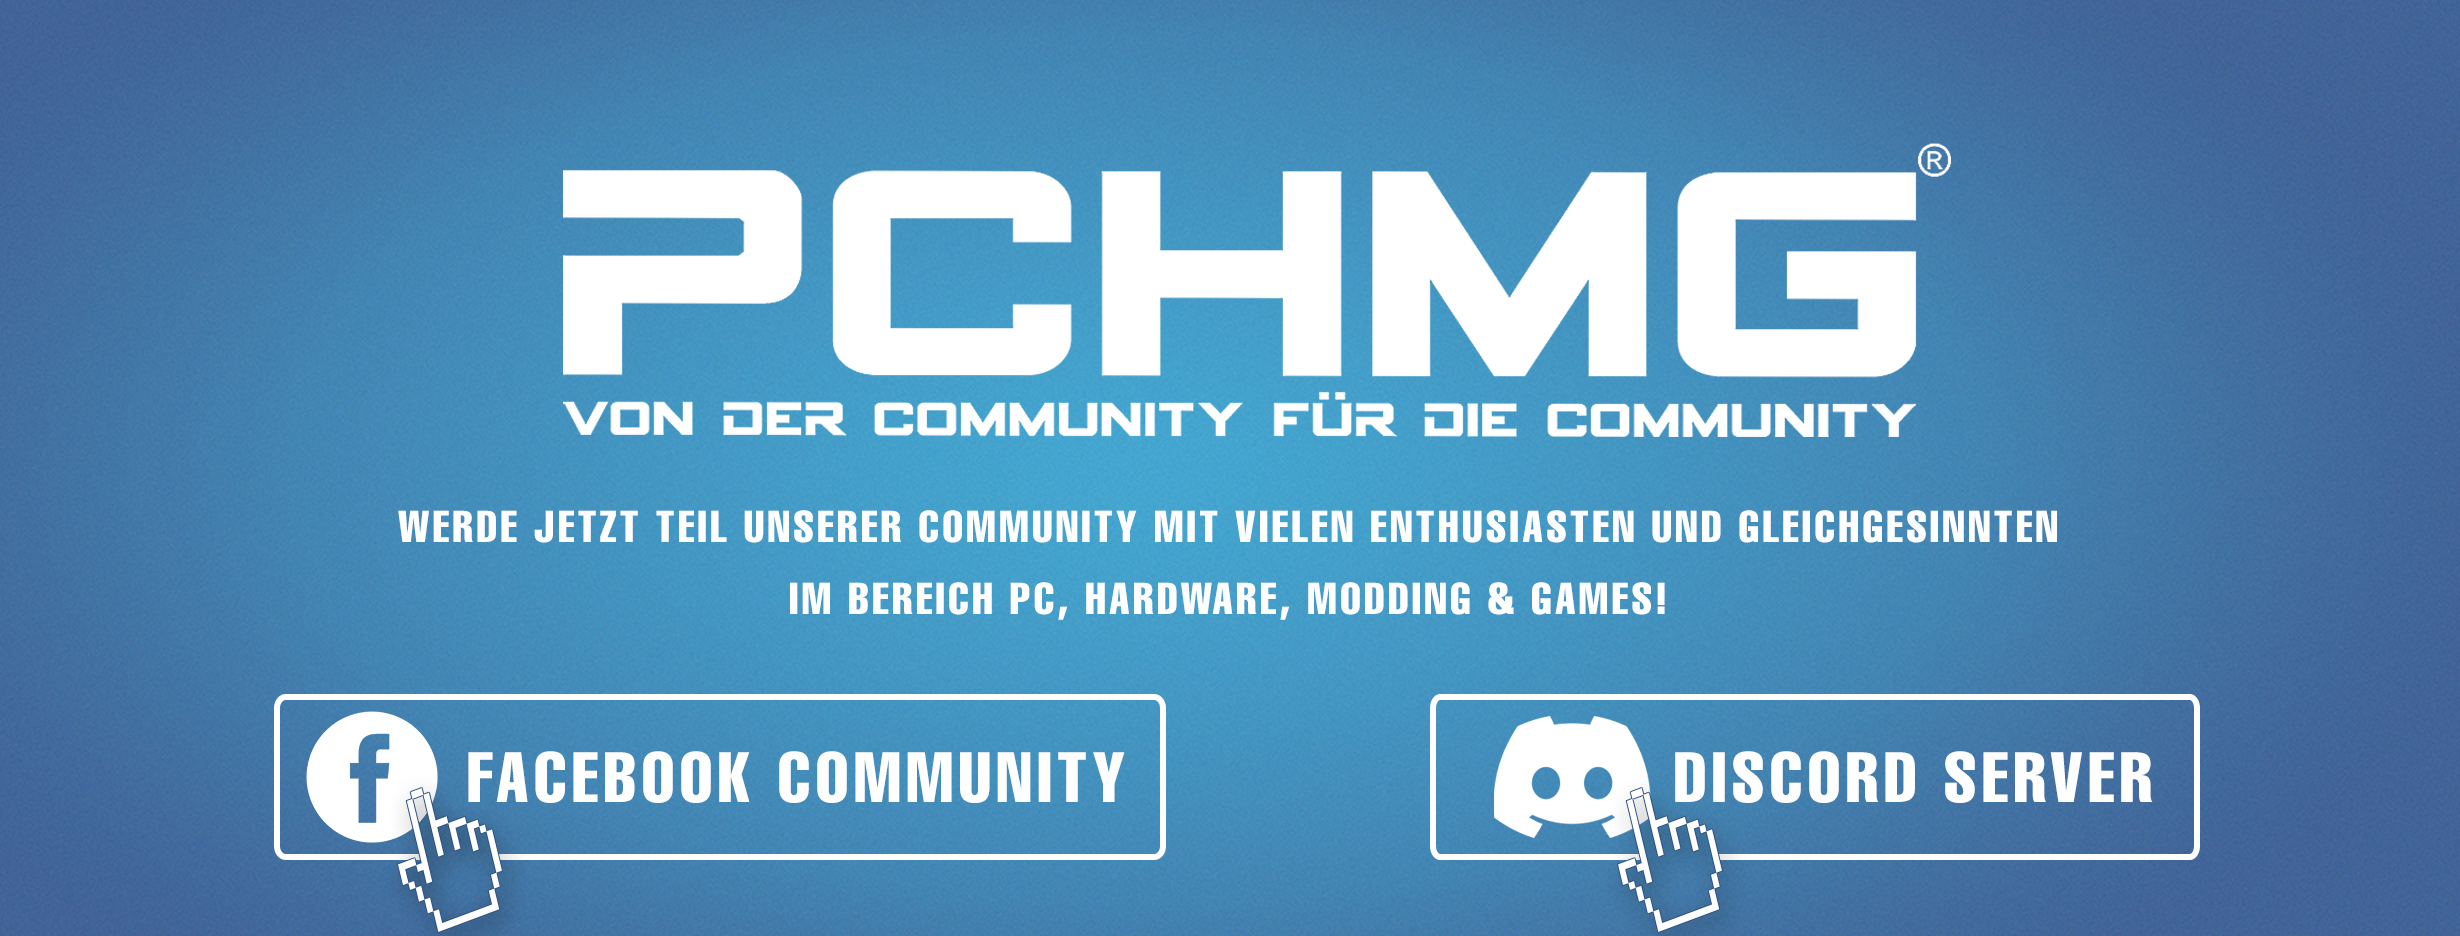 PCHMG Banner 4